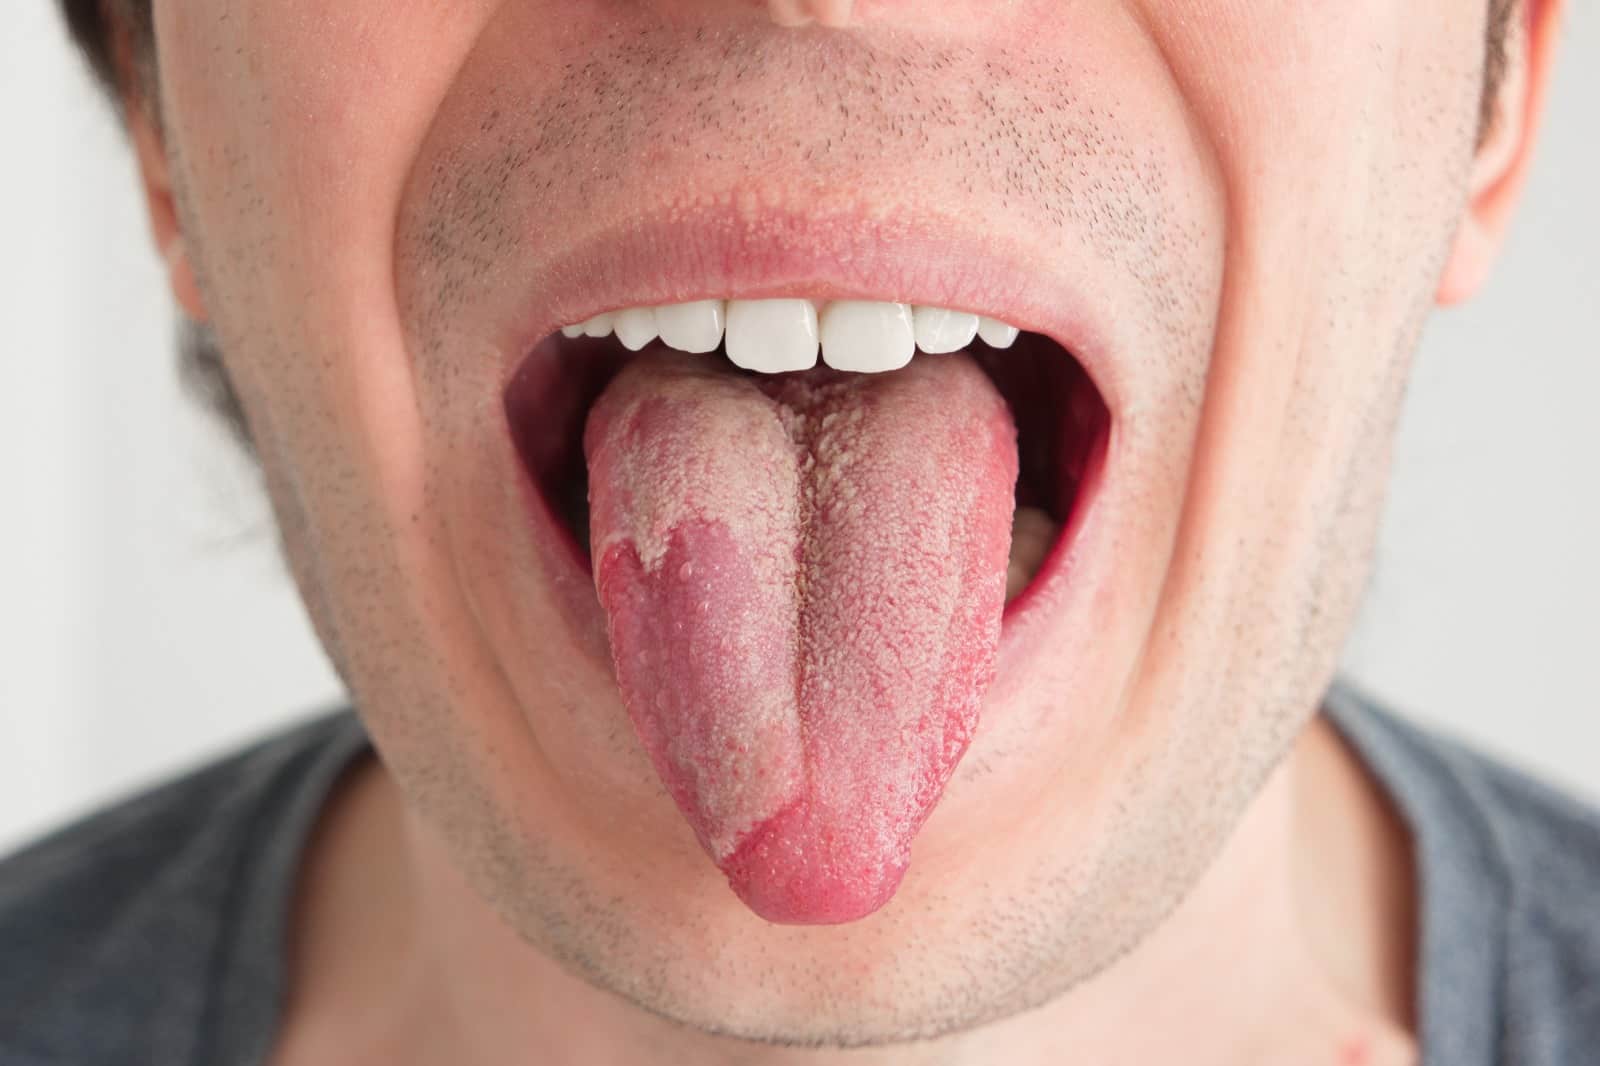 Top oral hygiene methods to prevent thrush